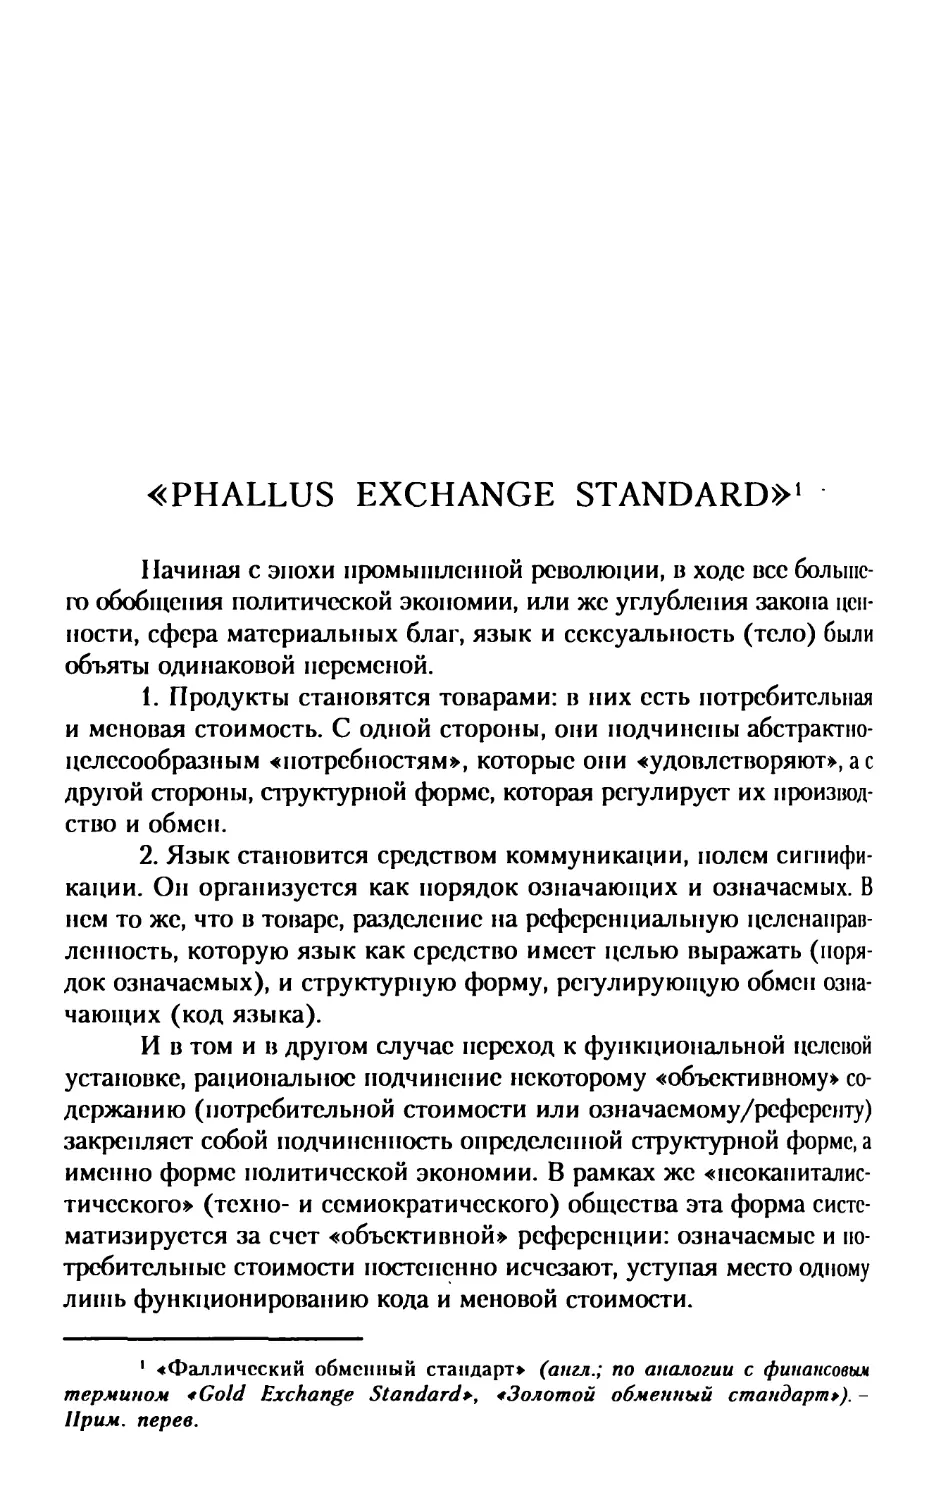 «Phallus exchange standard»